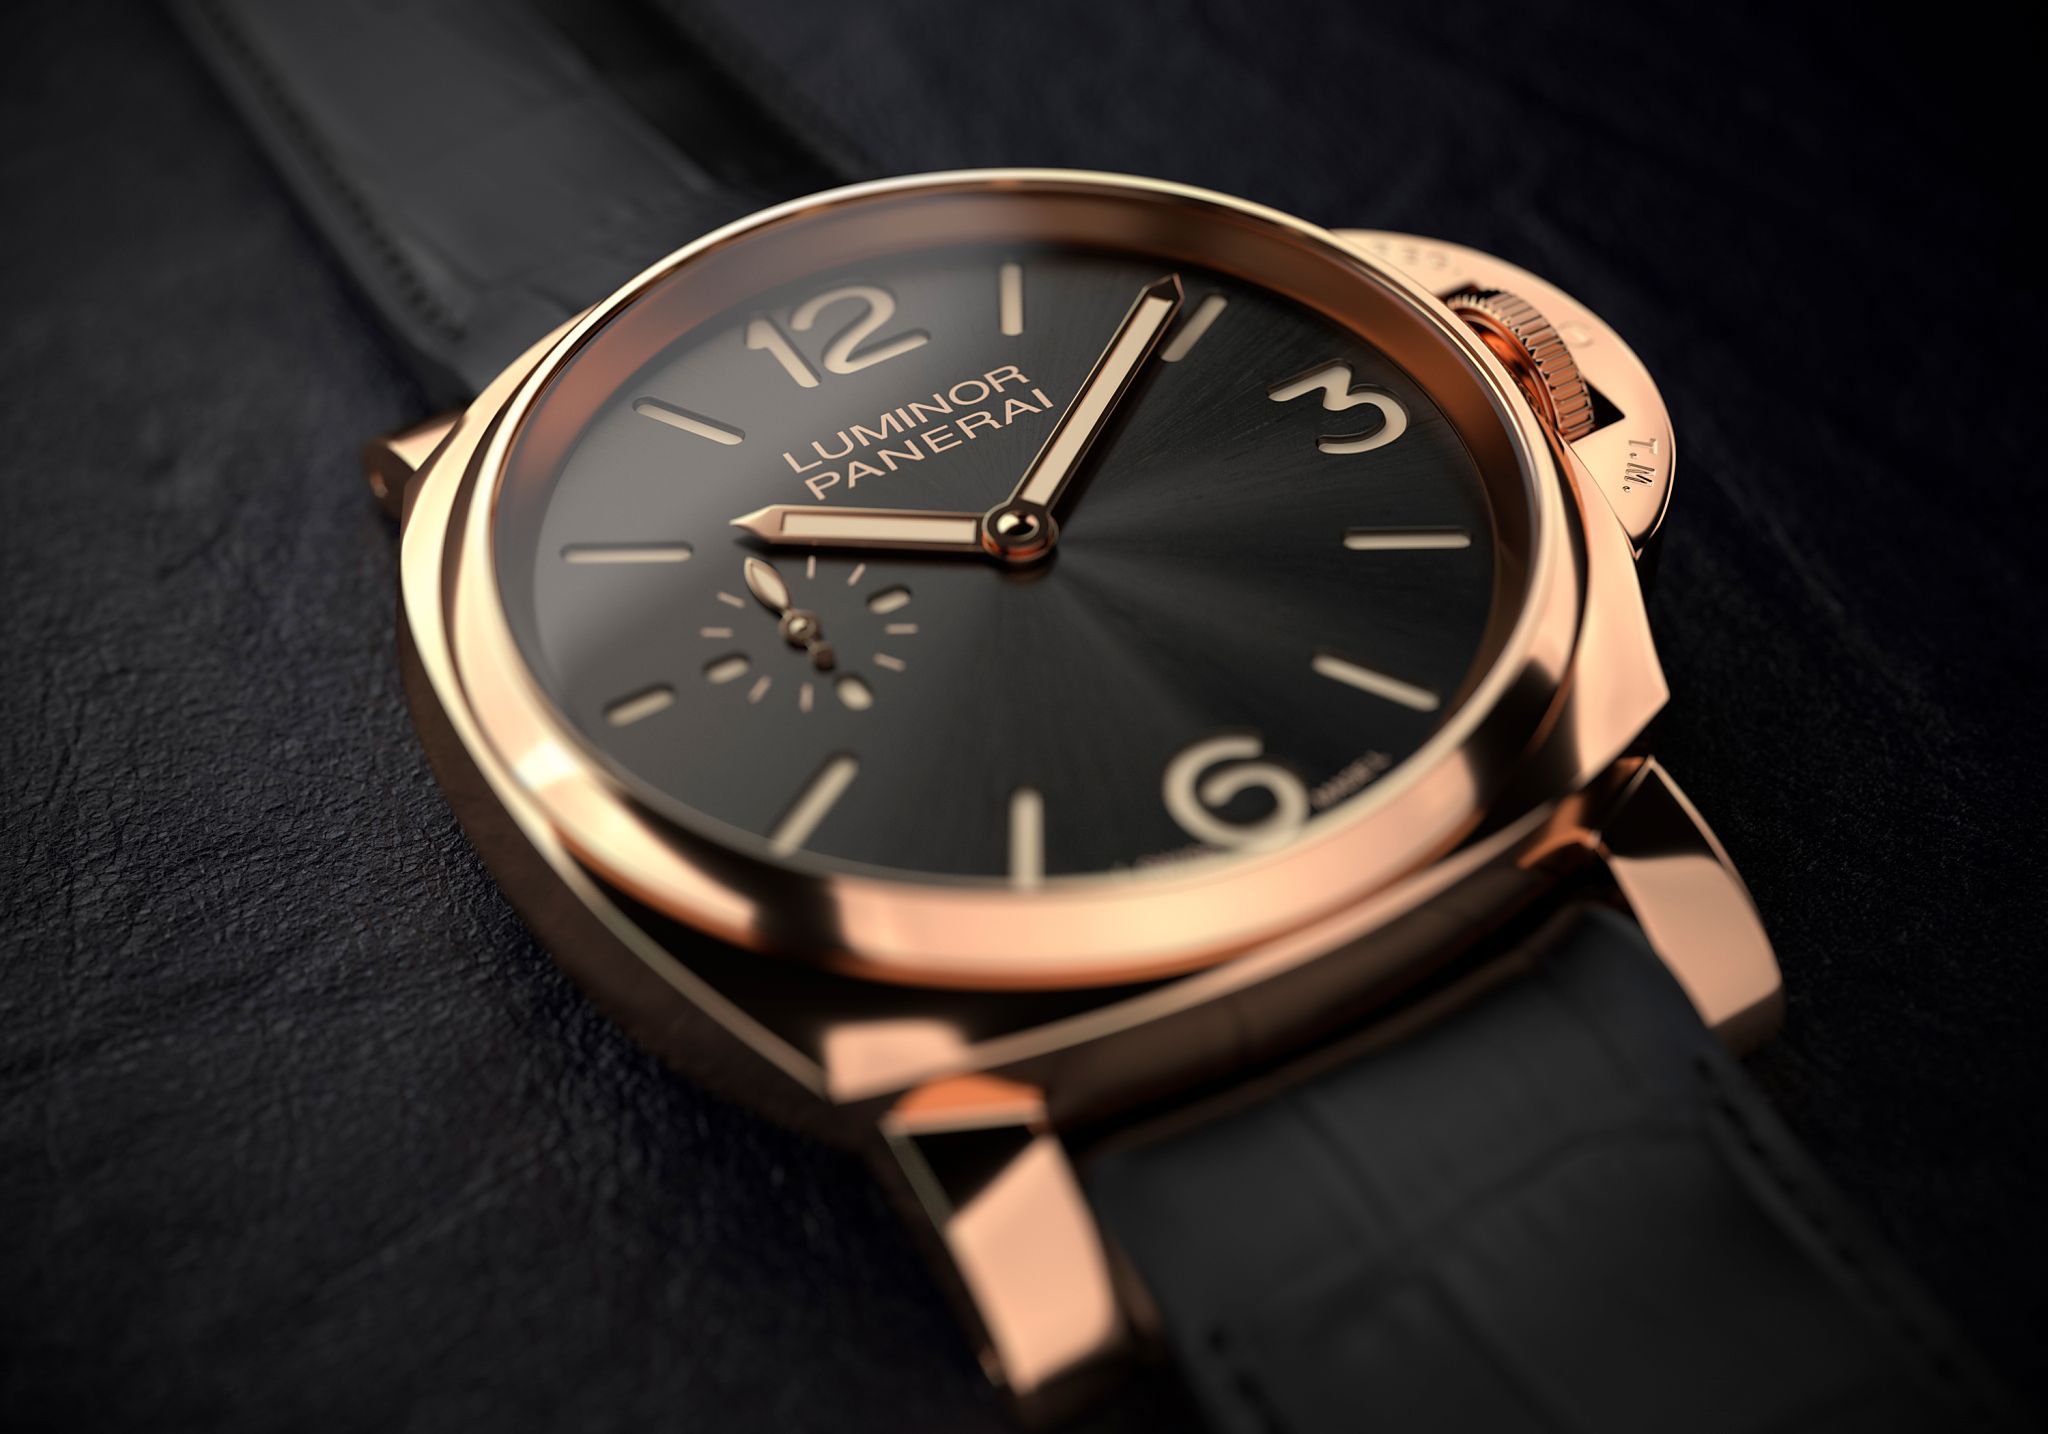 A render for luxury Italian watchmaker Panerai.